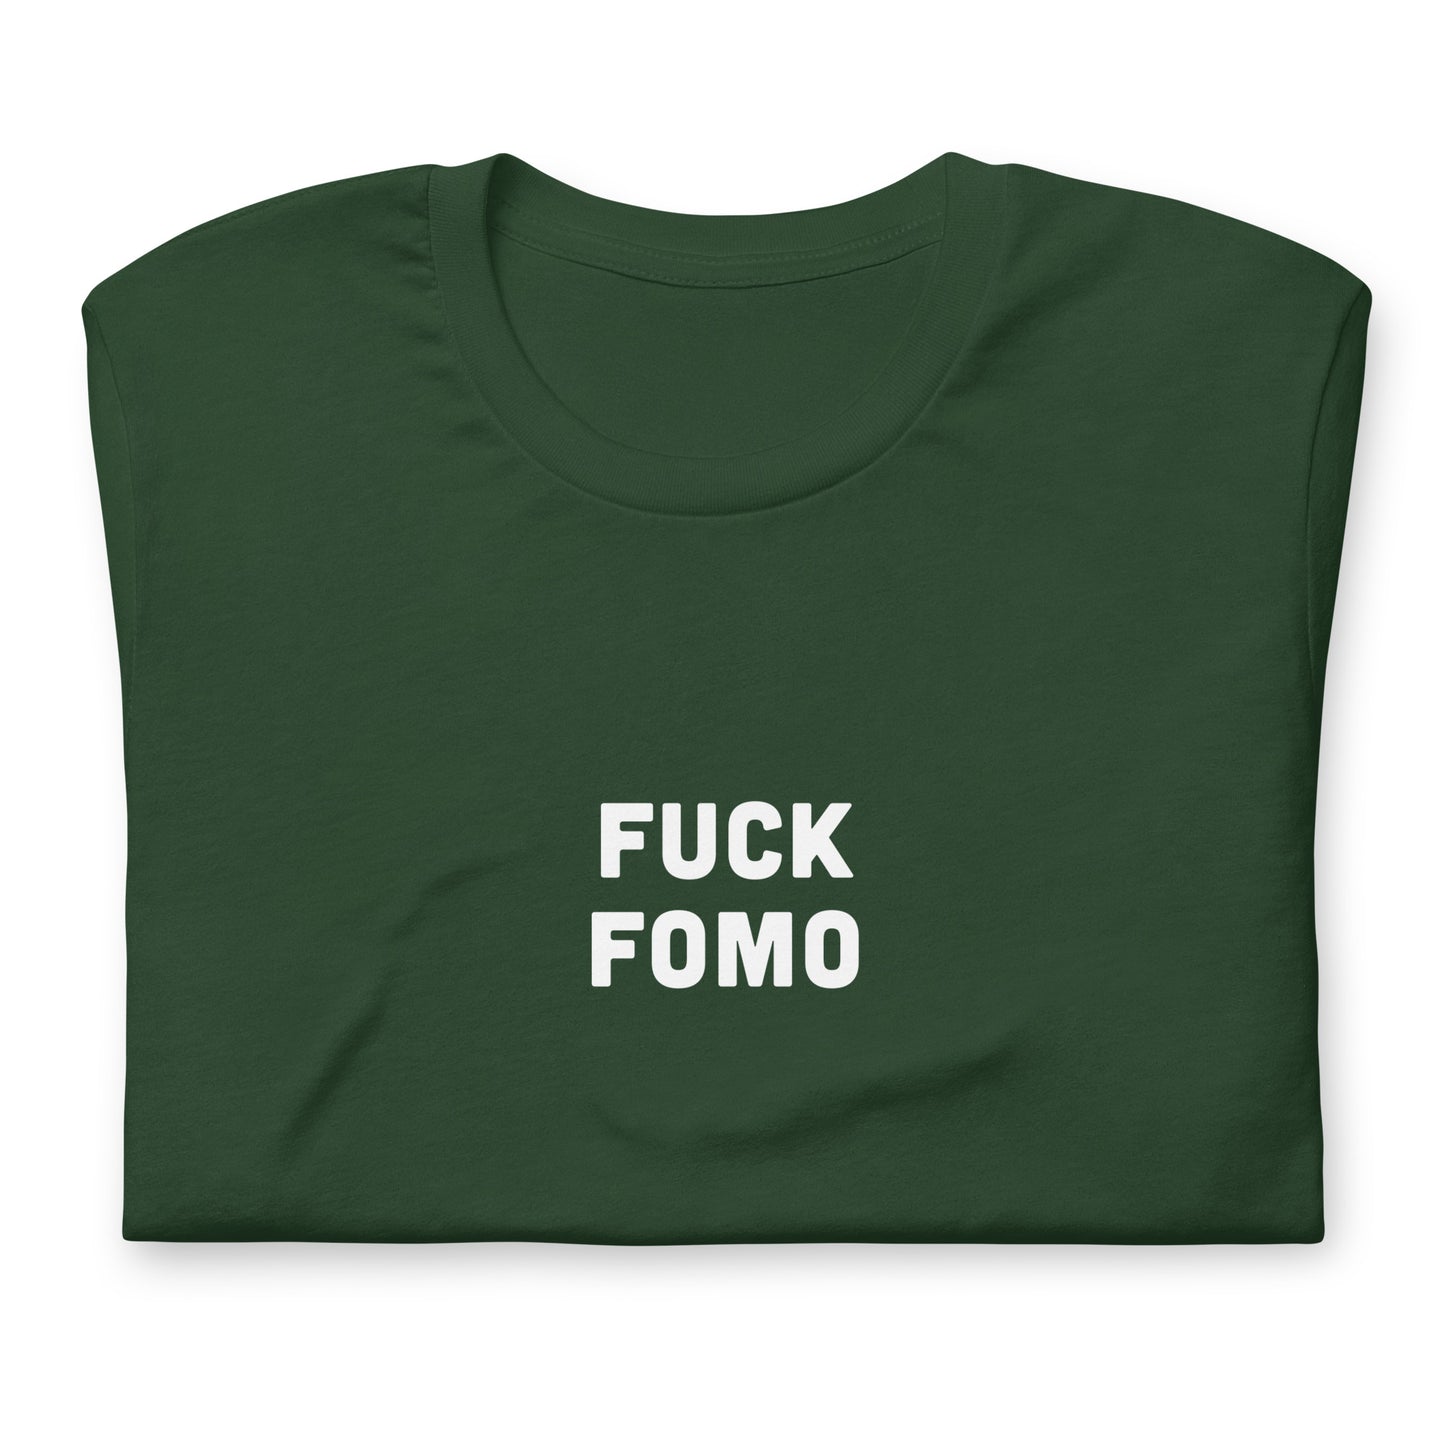 Fuck Fomo T-Shirt Size 2XL Color Black